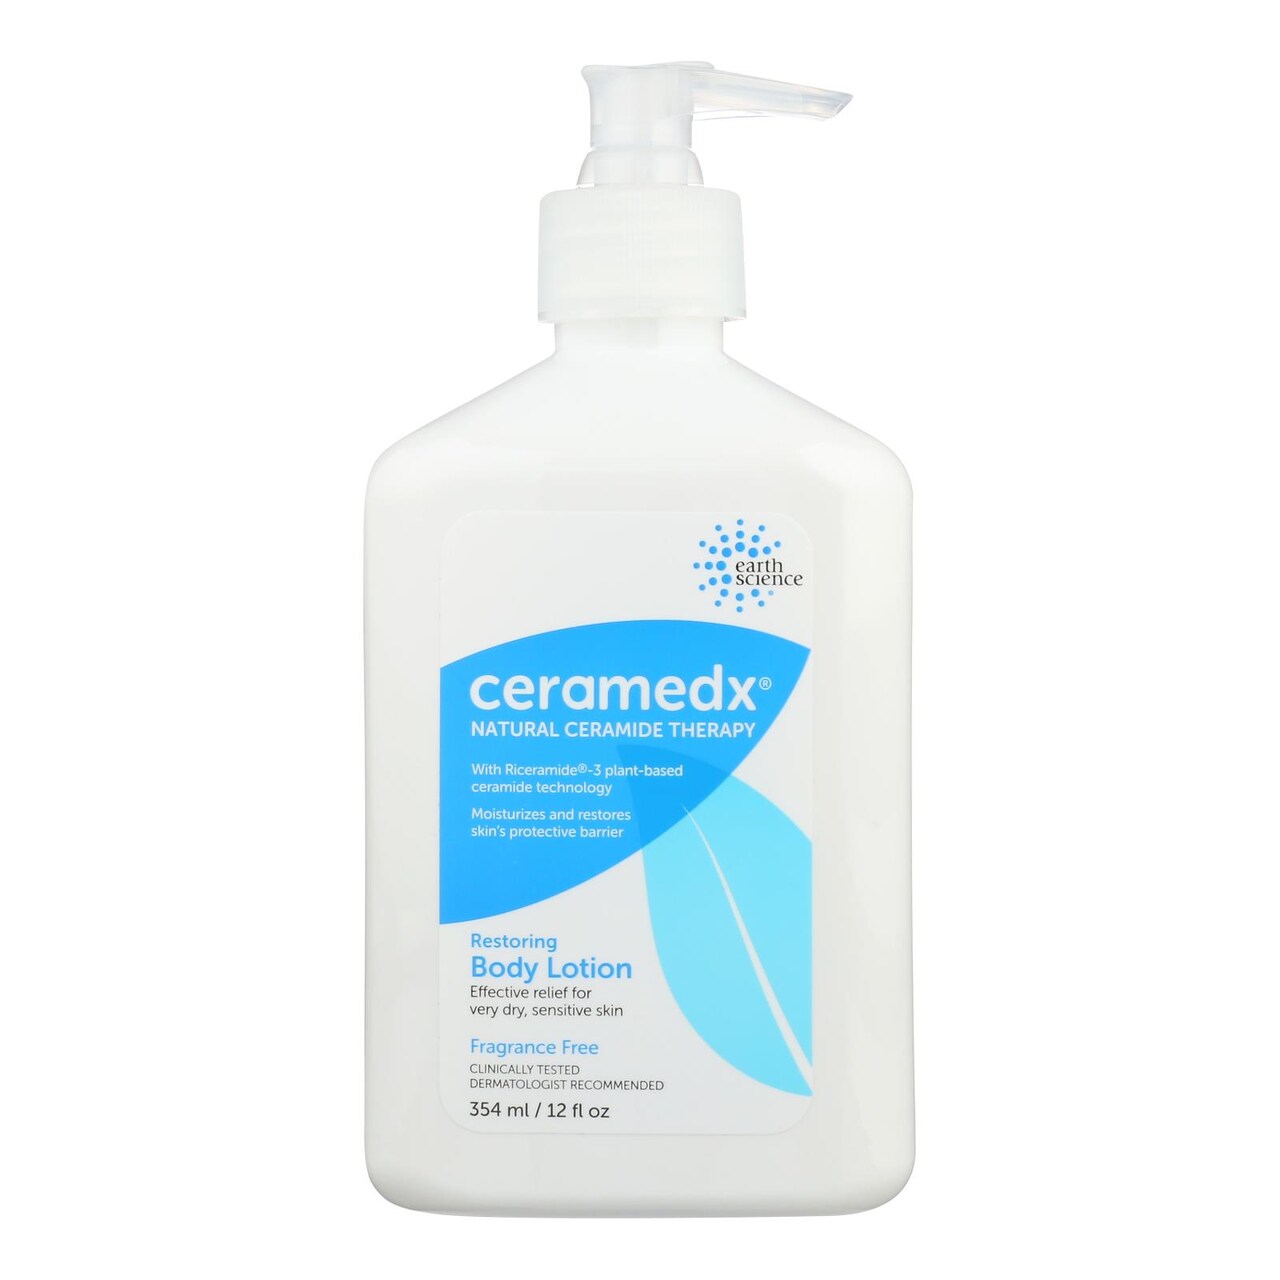 Ceramedx Restoring Body Lotion Fragrance Free - 1 Each - 12 oz